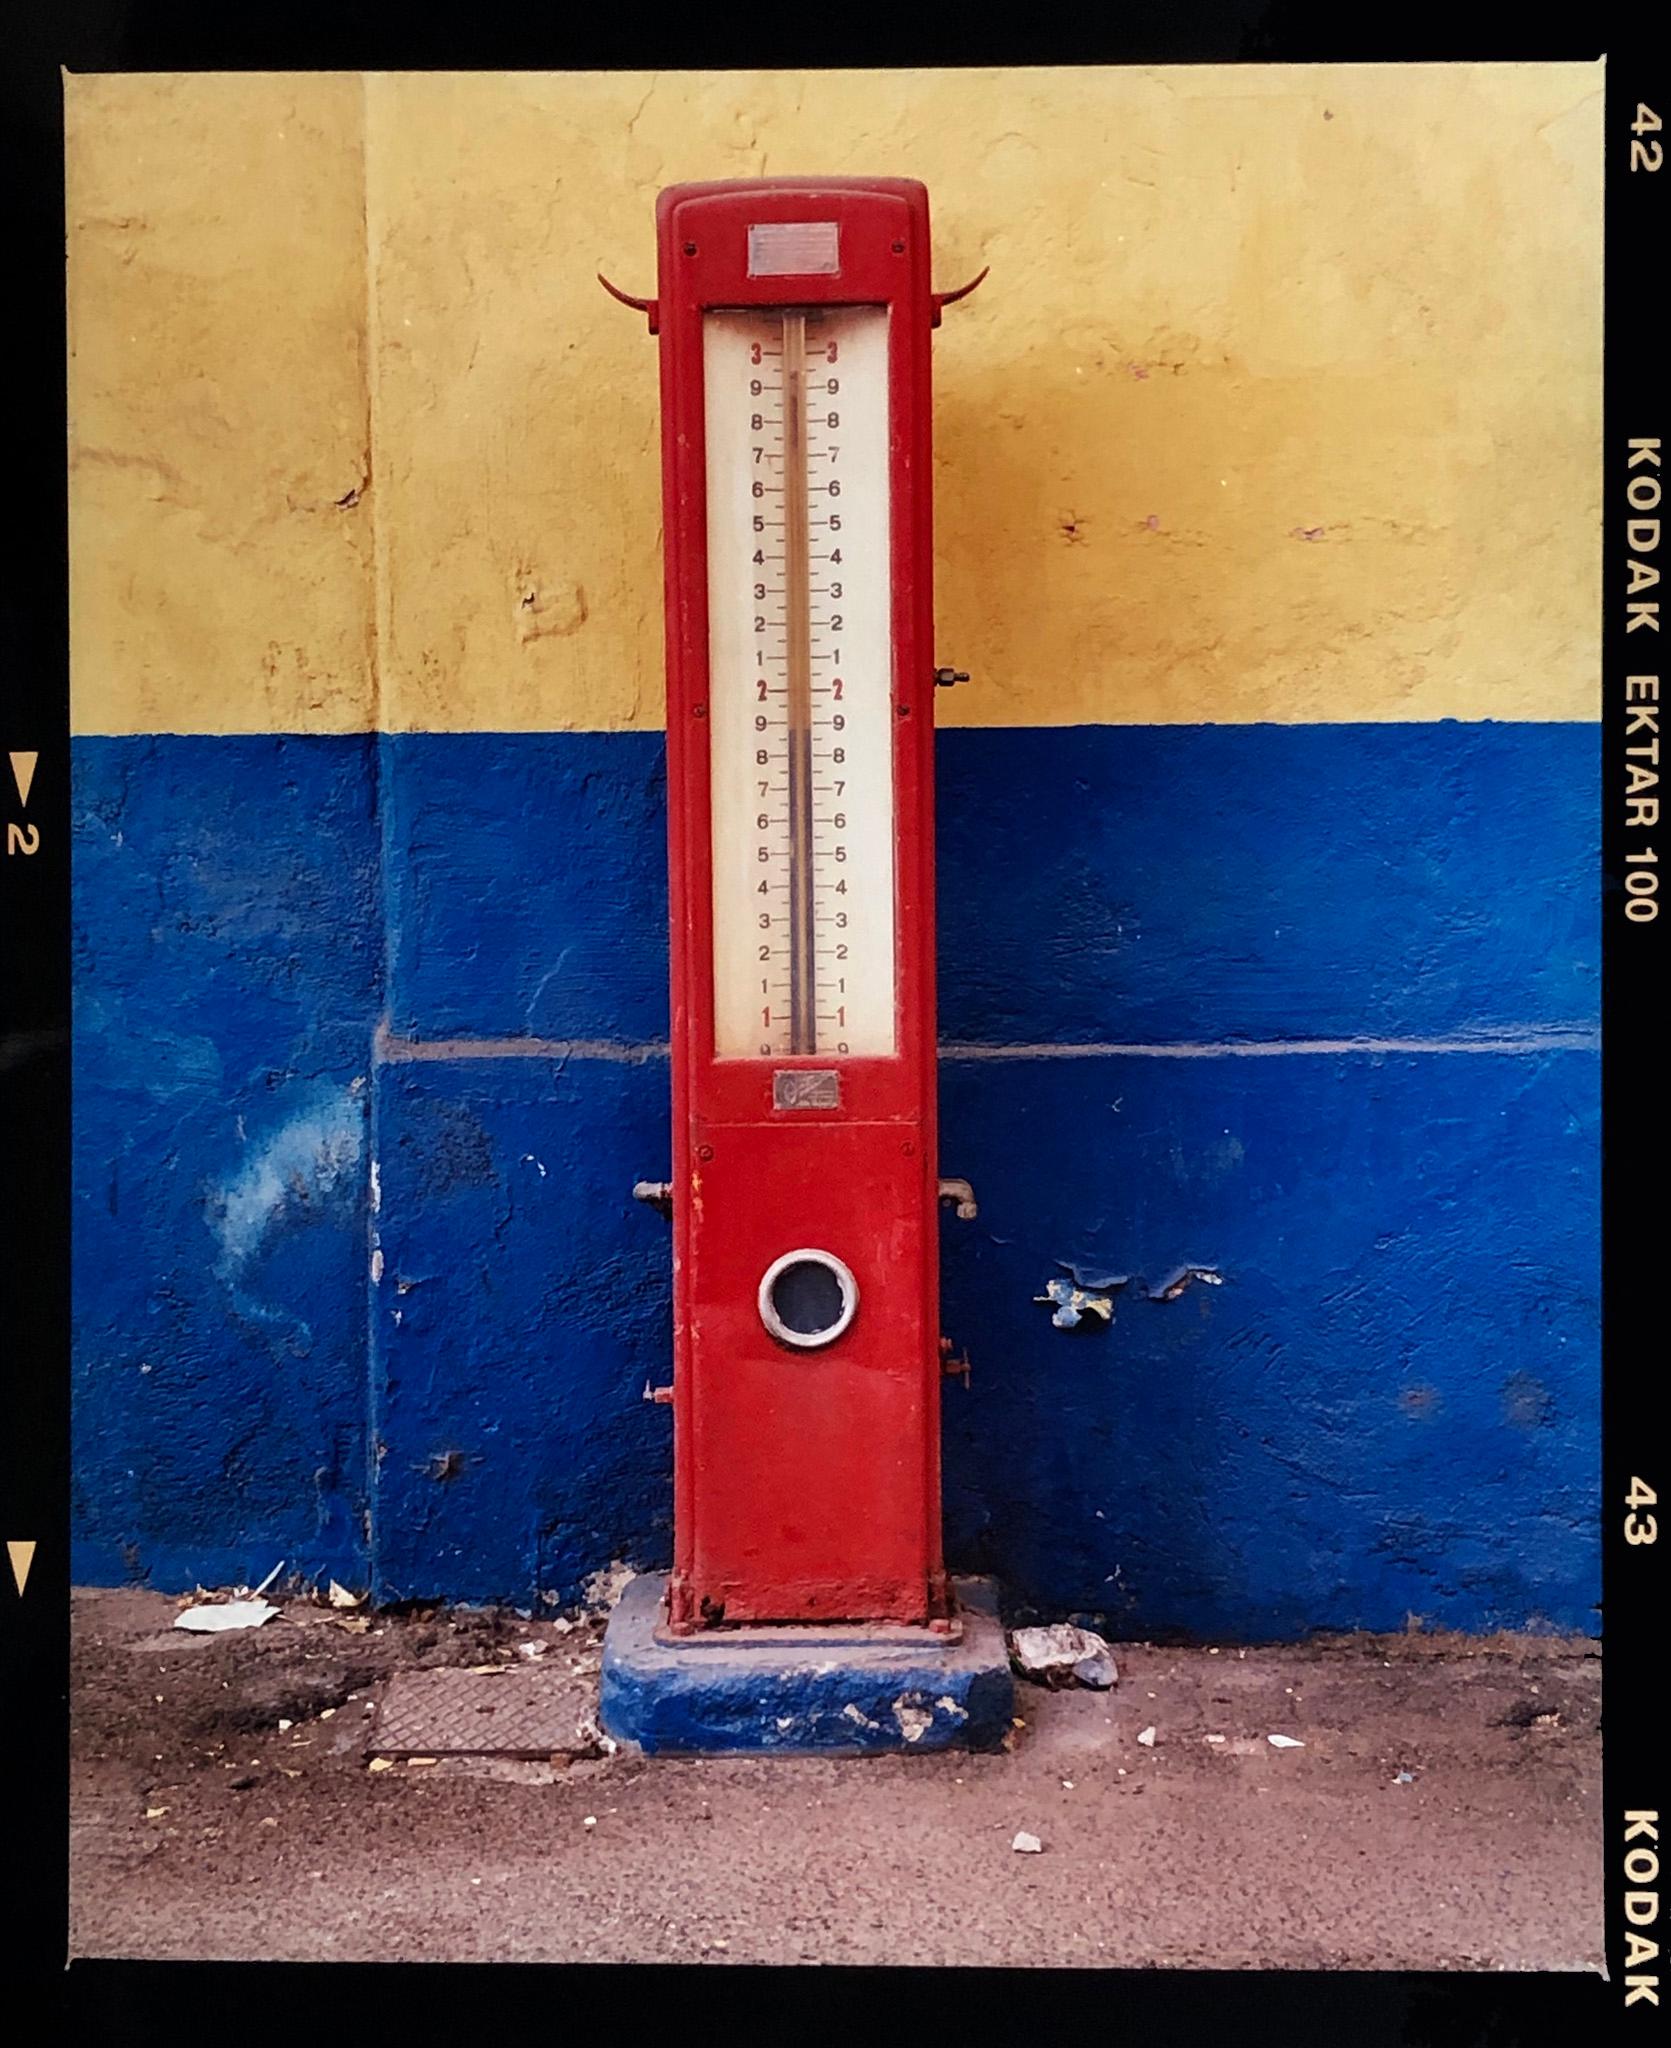 Richard Heeps Landscape Photograph - Tyre Pump, Milan - Italian color photography